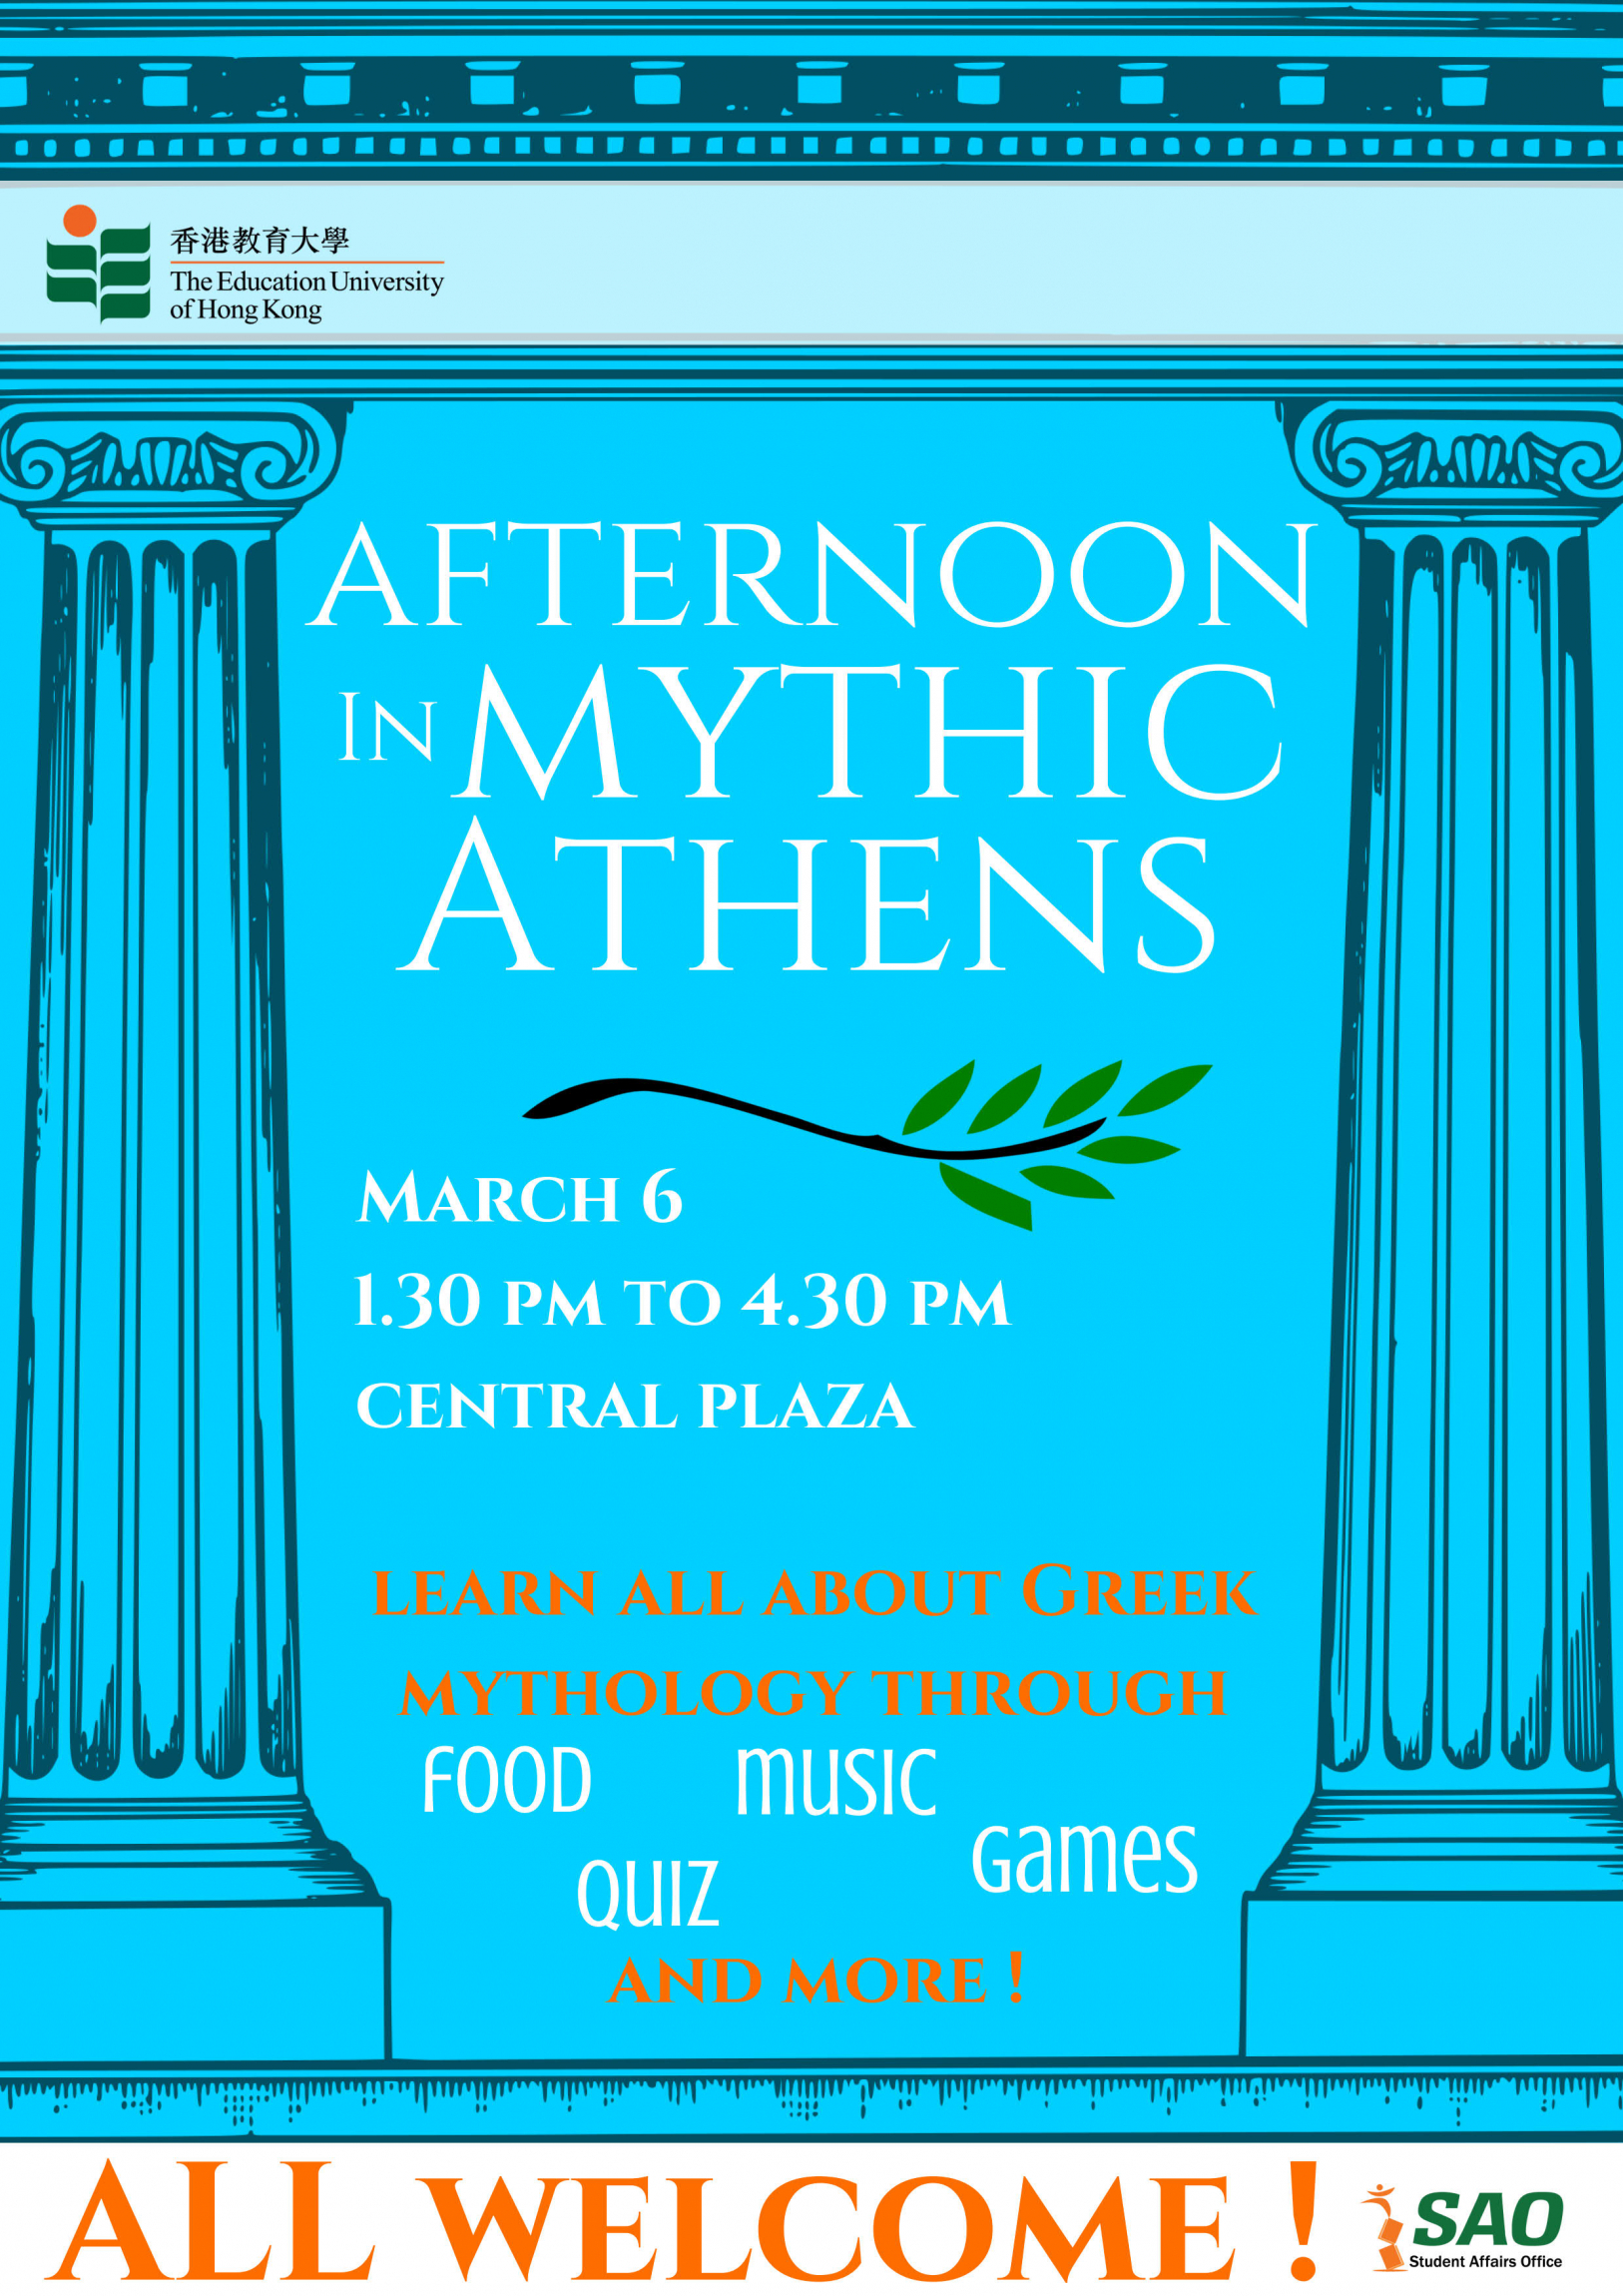 Self Photos / Files - Mythic Athens Poster